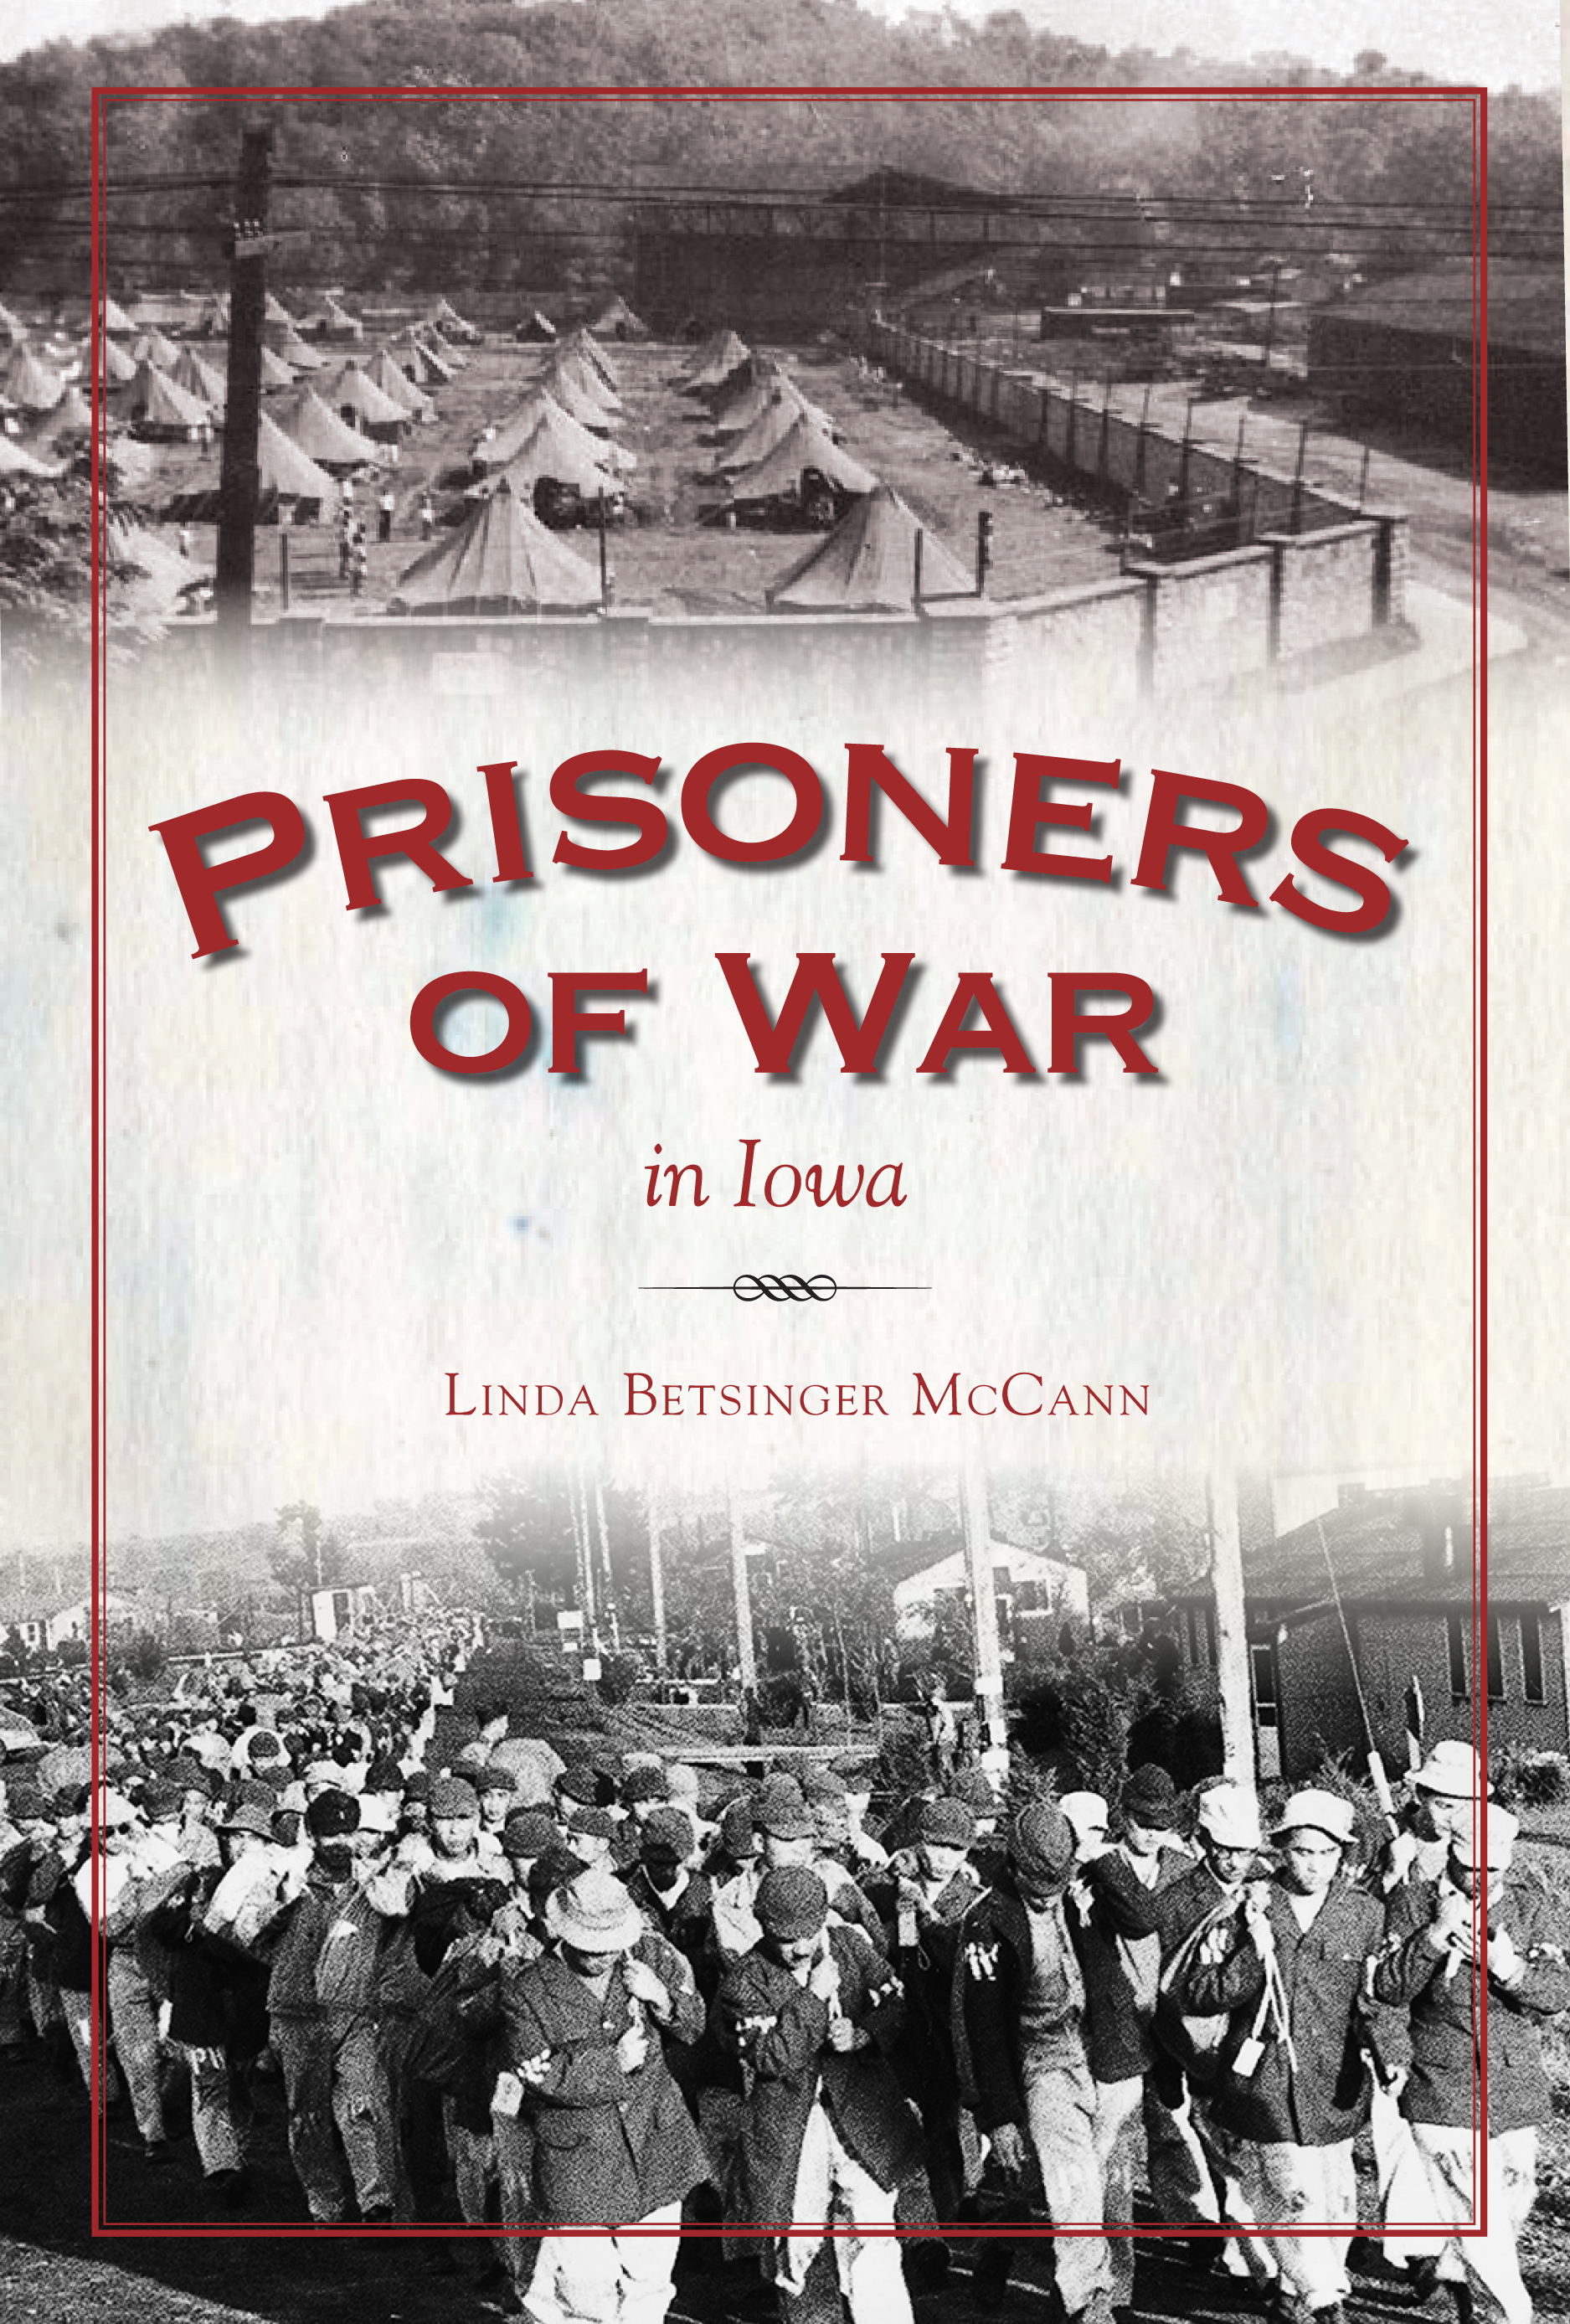 Linda McCann Author of POWs in Iowa, Sergeant Bluff American Legion Hall April 5, 6:30 pm